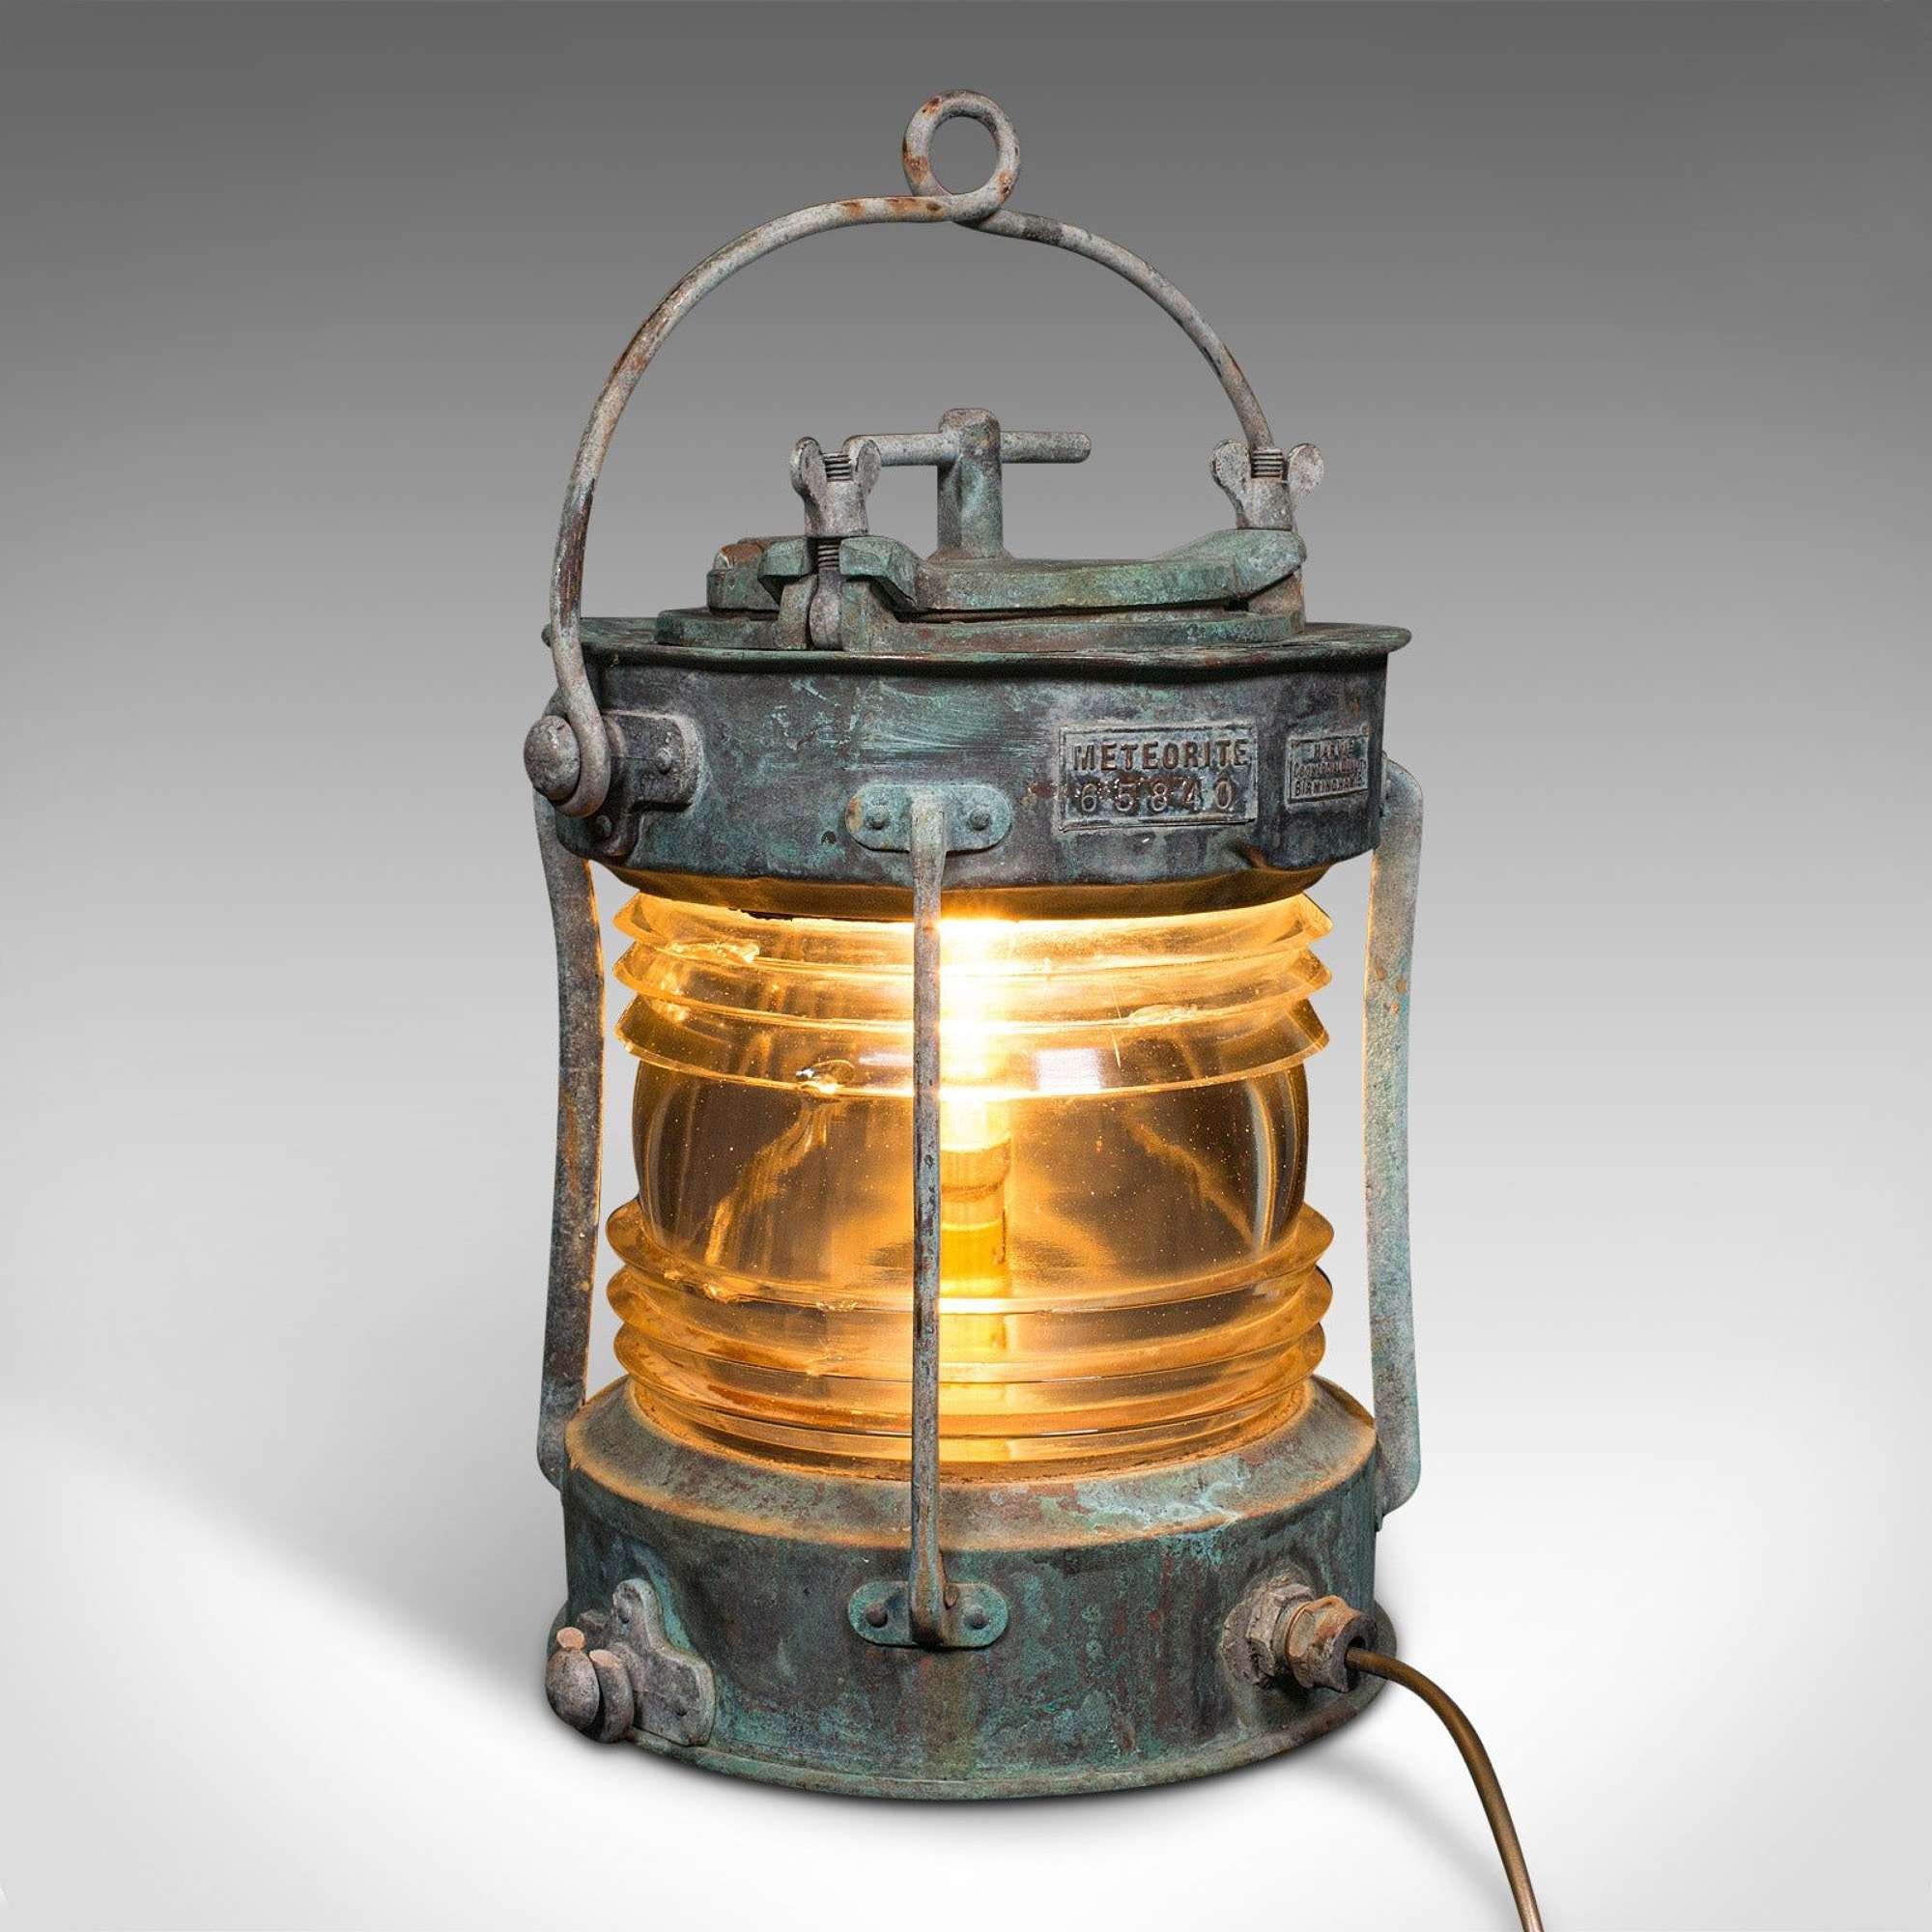 Antique Ship's Anchor Lamp, English, Bronze, Glass, Maritime Light, Edwardian